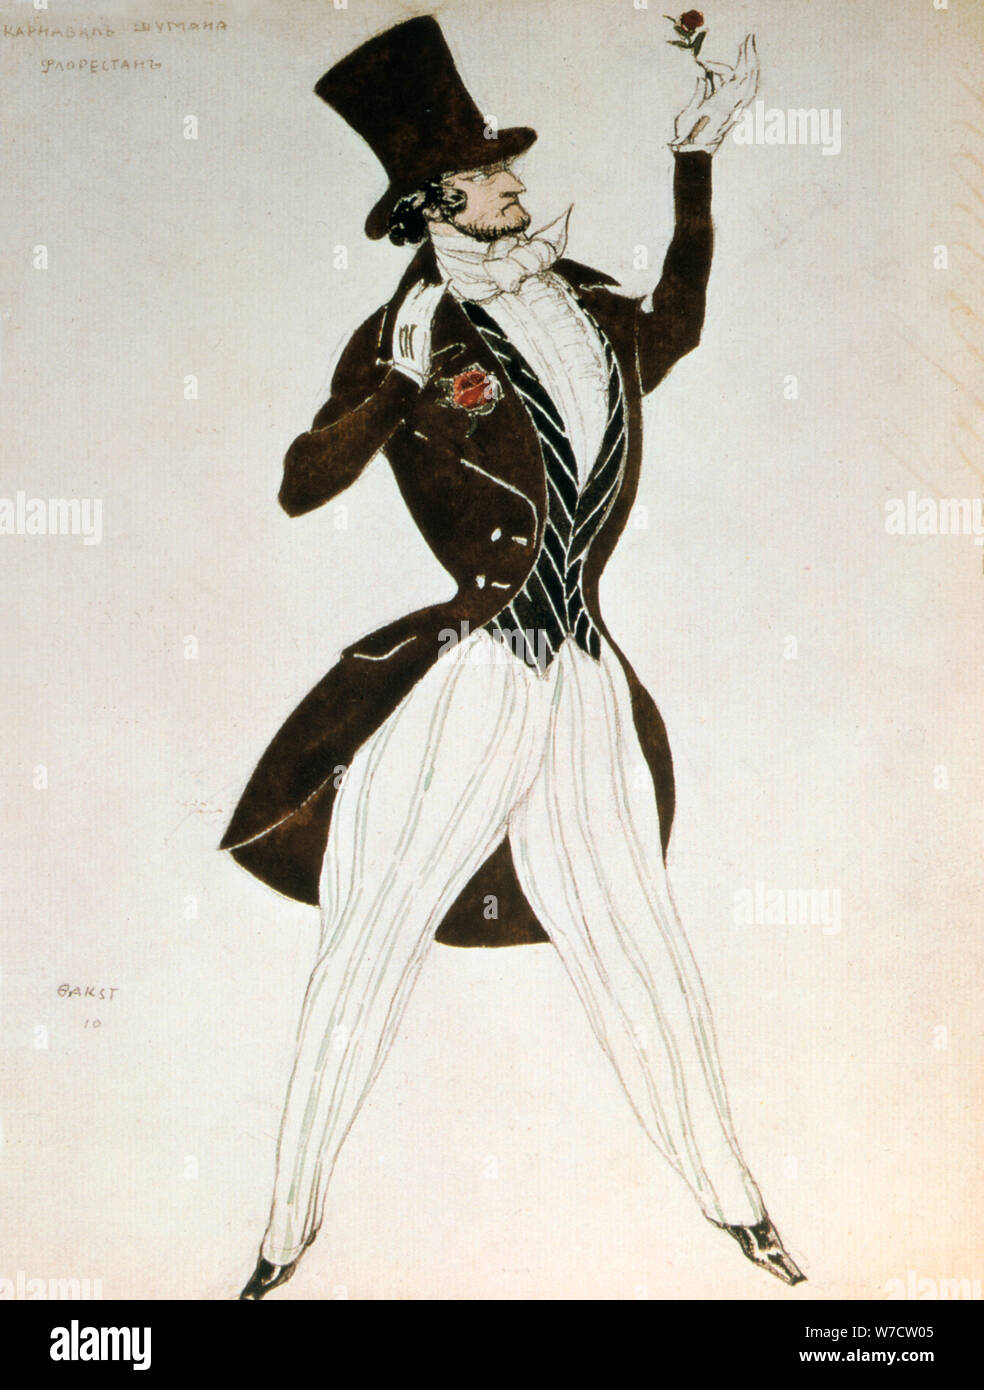 Florestan, design for a costume for the ballet Carnival composed by Robert Schumann, 1919. Artist: Leon Bakst Stock Photo